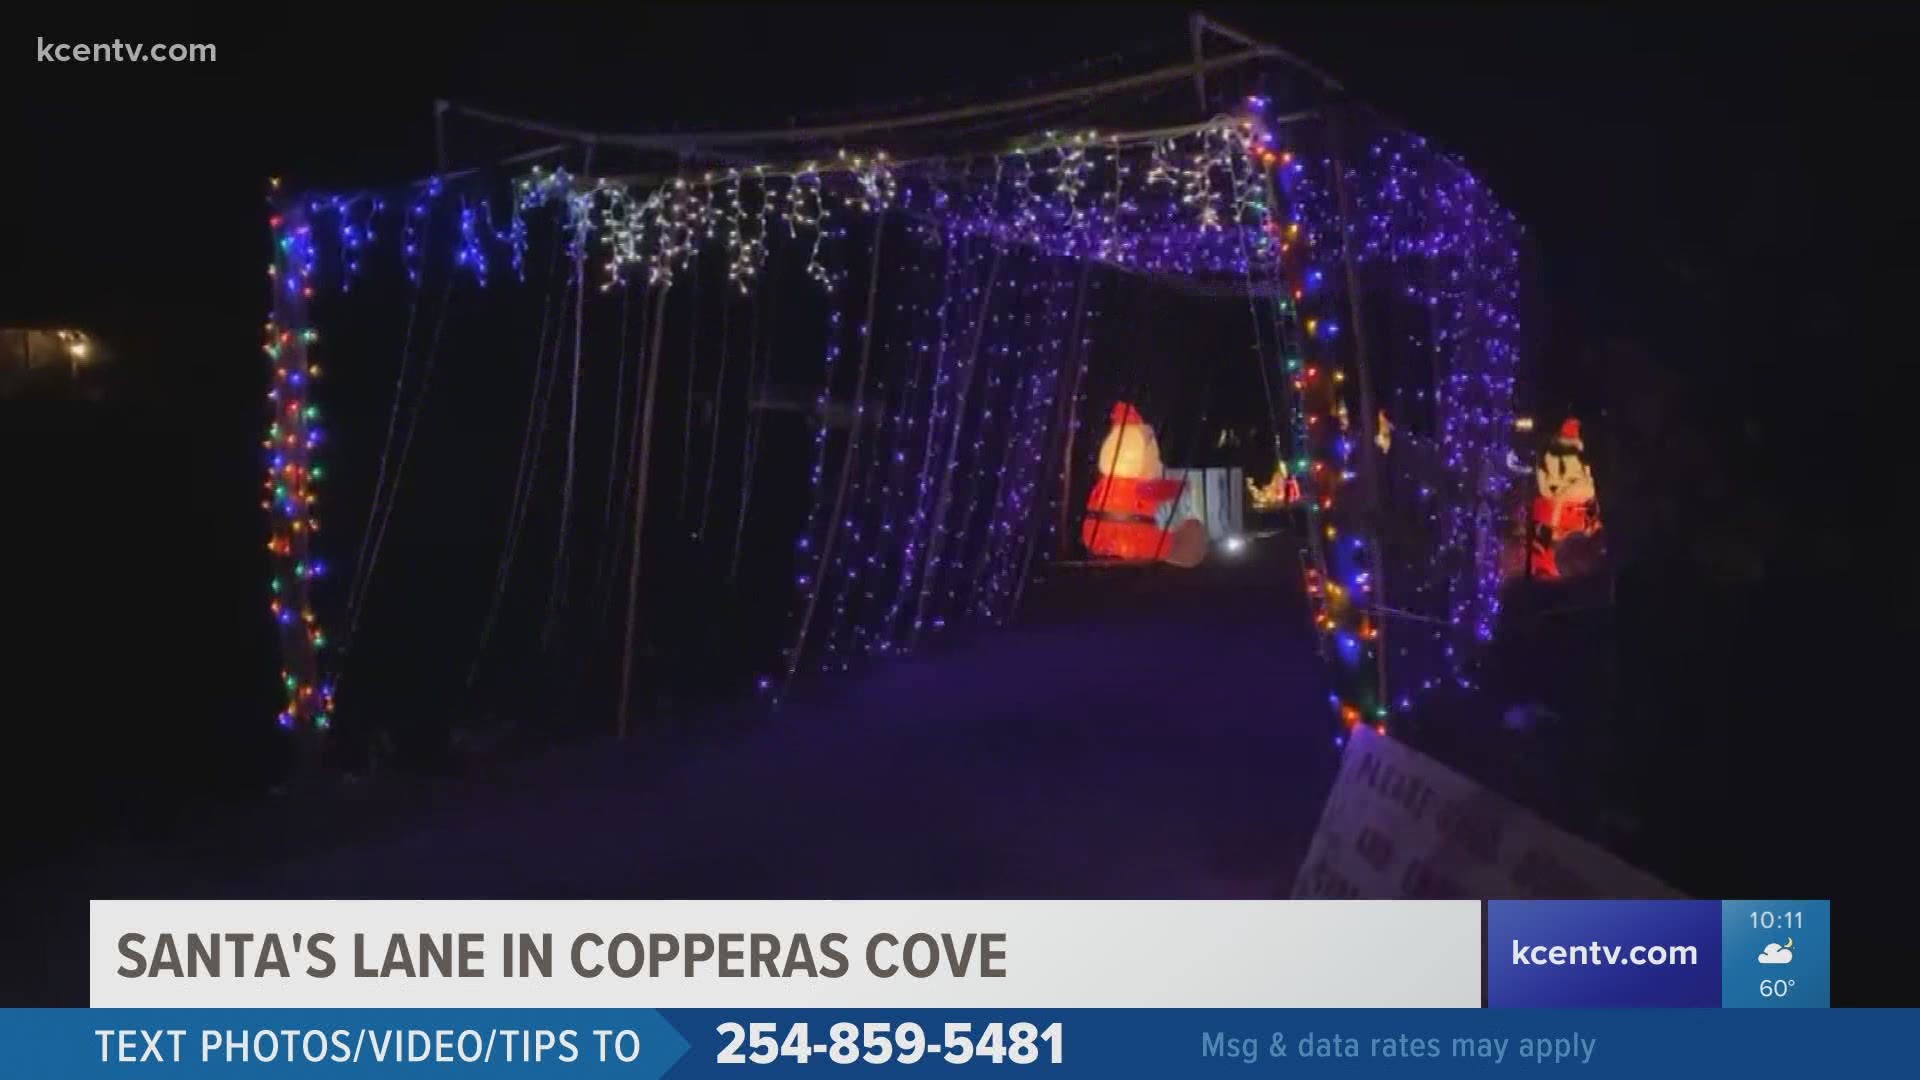 Copperas Cove family creates Christmas light display